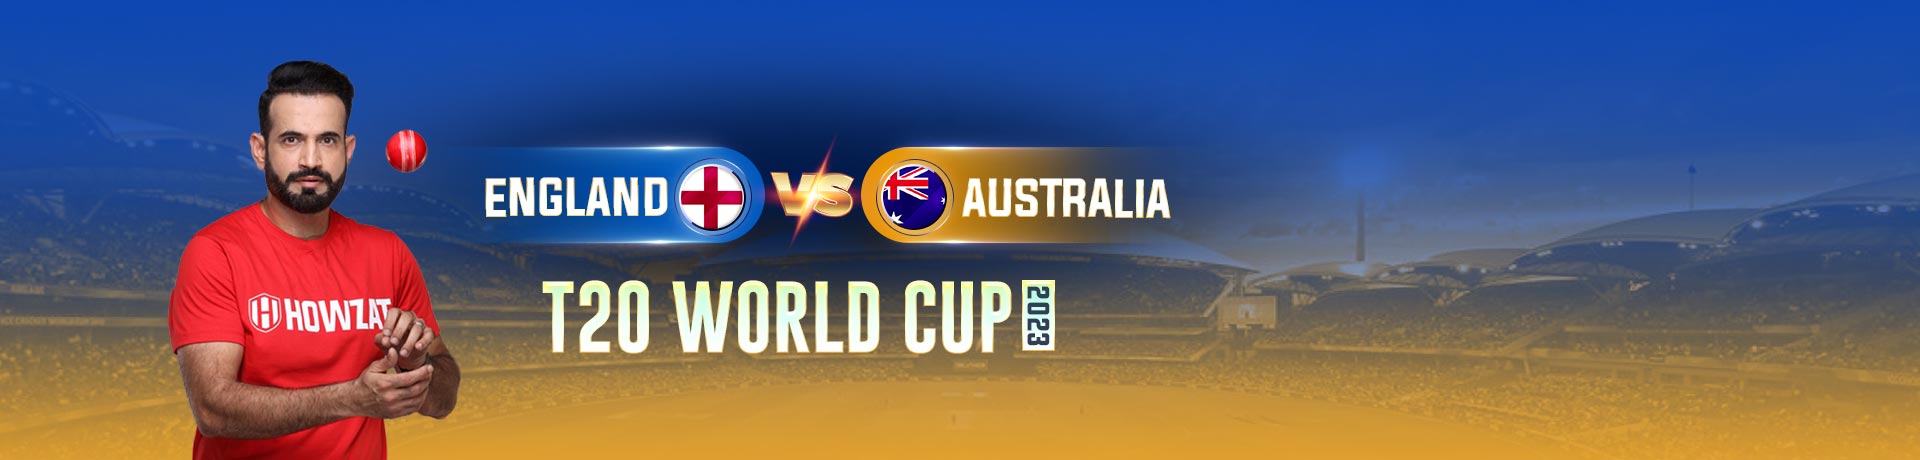 England vs Australia T20 World Cup